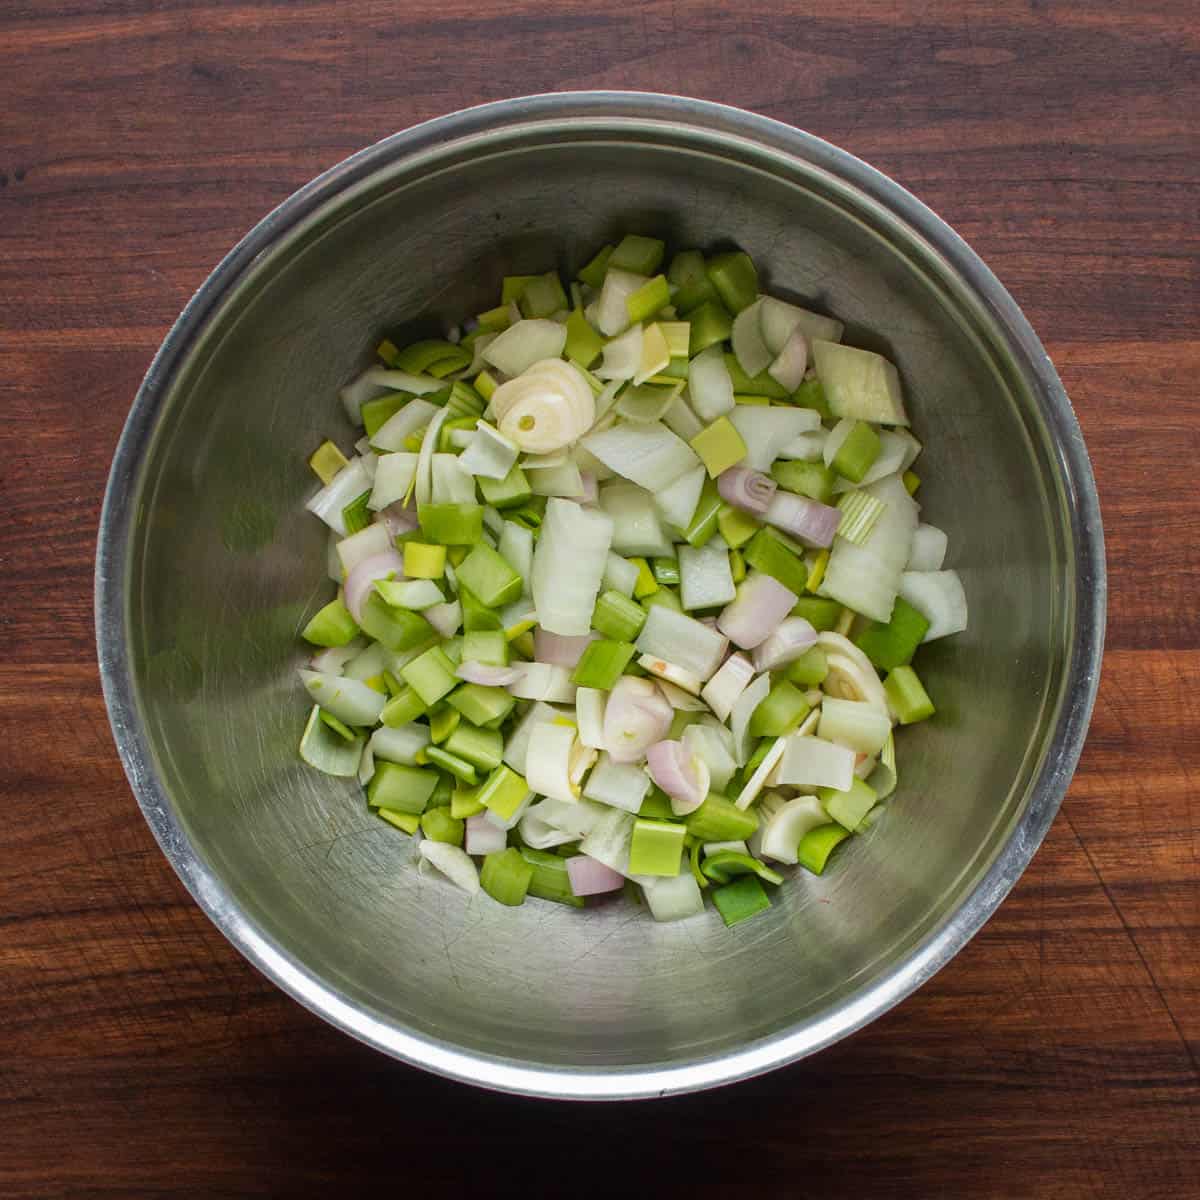 Cut onion, shallot, leek and garlic in a bowl